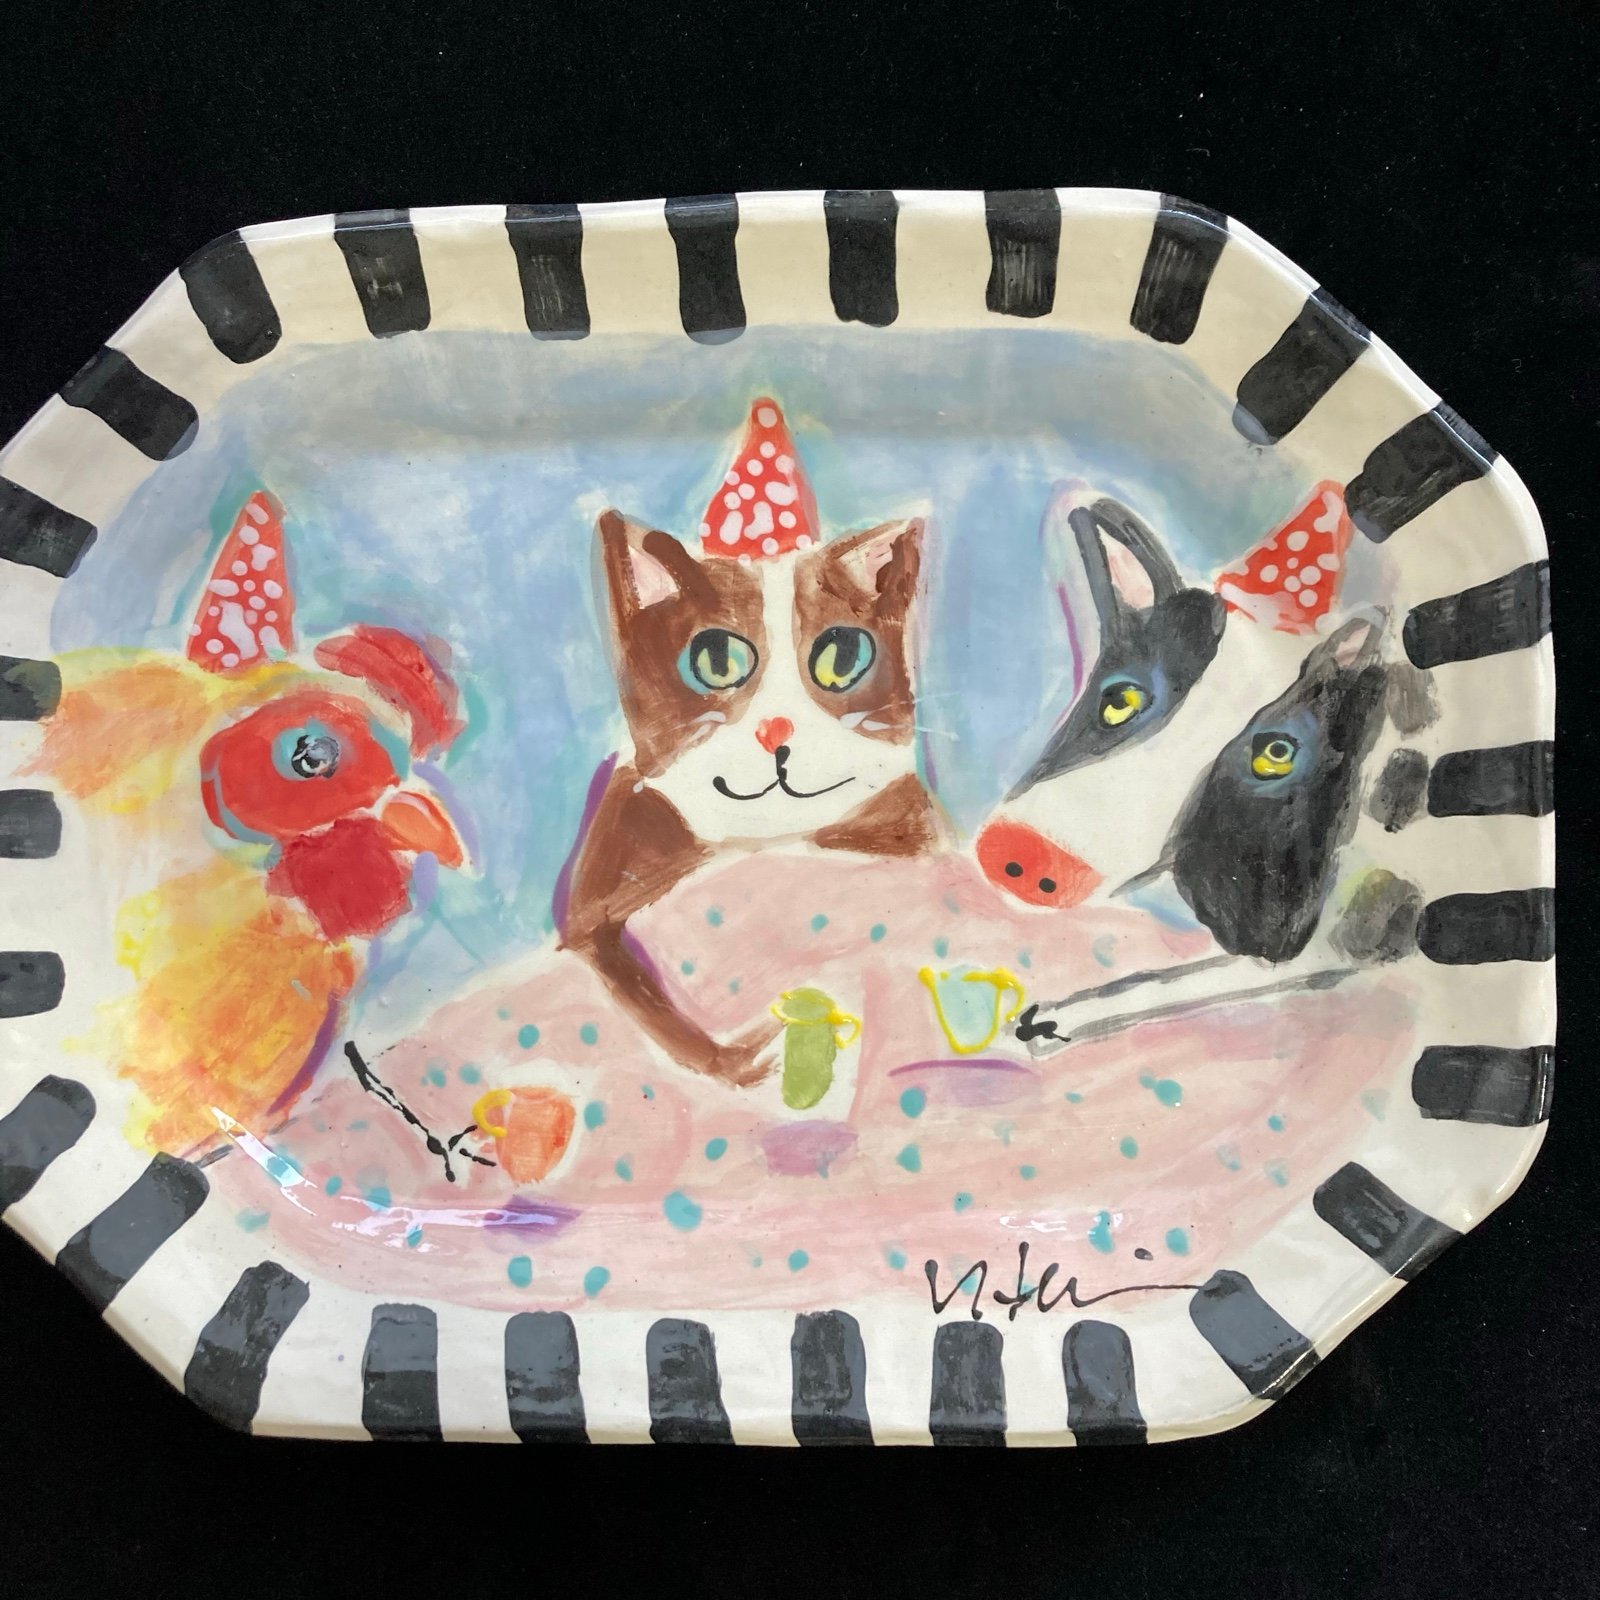 Tea With Friends” Handmade Ceramic Original 8 Sided Platter 13”x10” lz76OHYRP